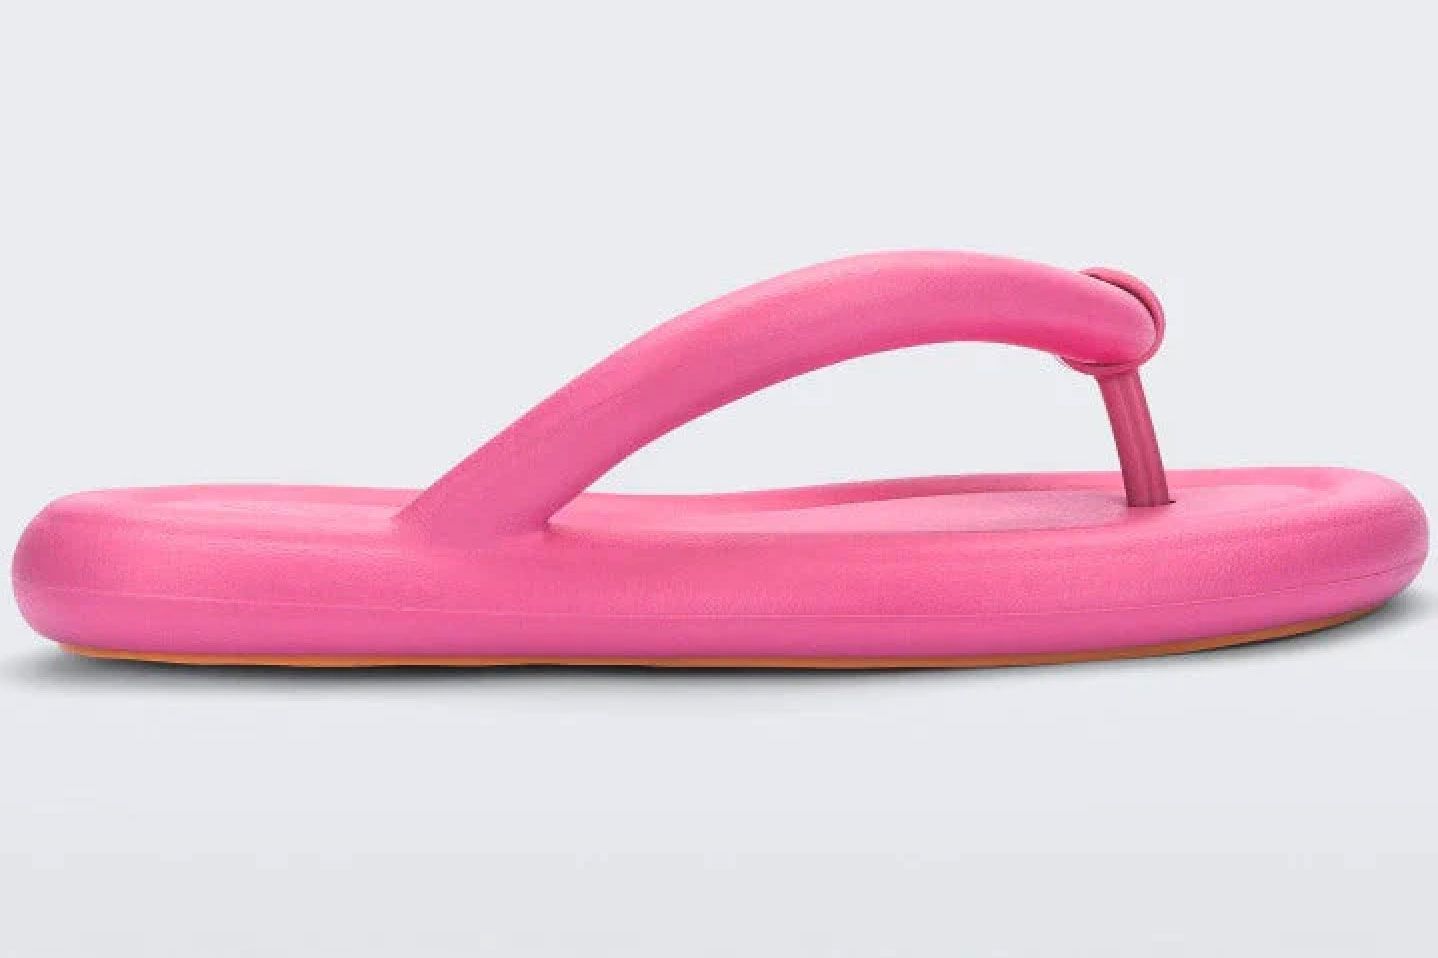 Elle, Comfortable Flip Flops for Women, Made in USA